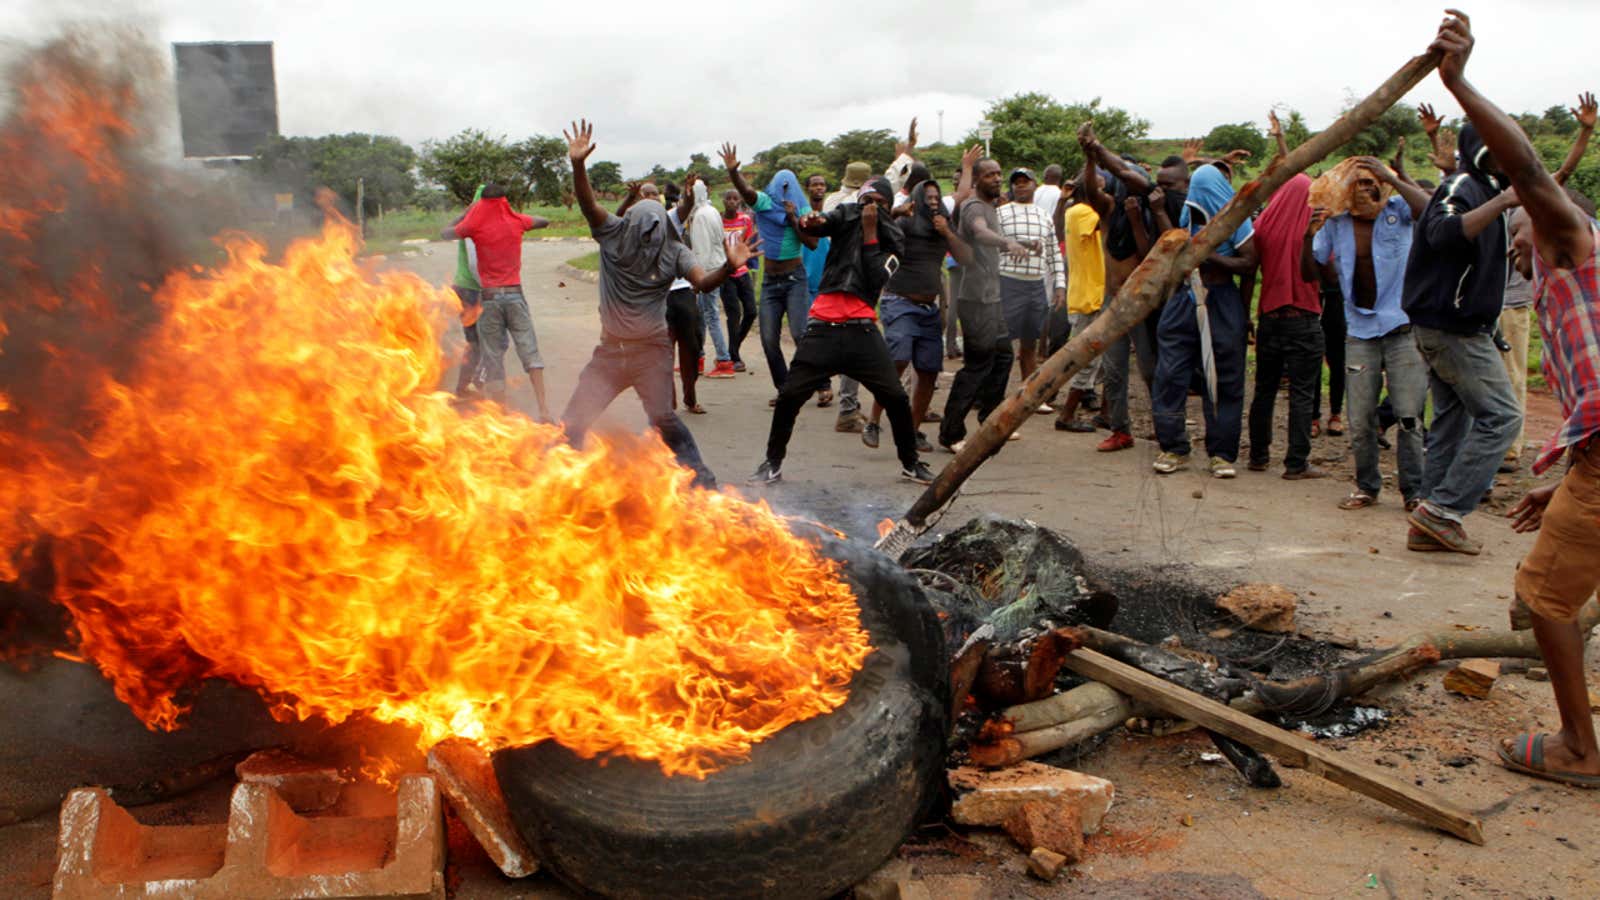 Zimbabwe is on fire, again.